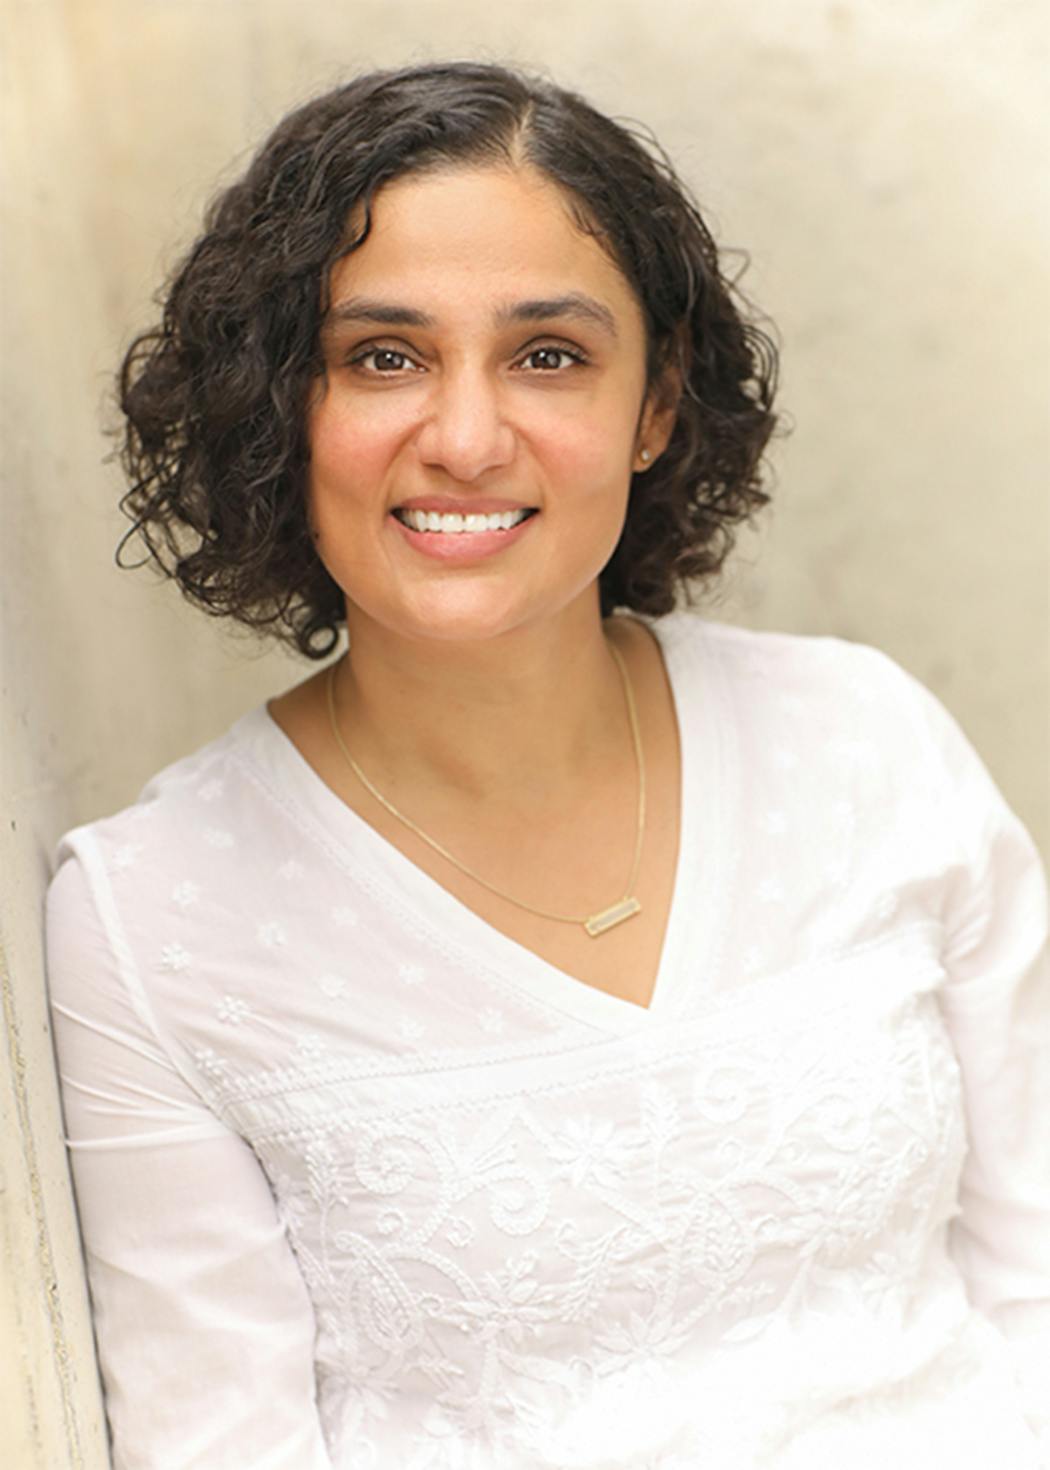 Author Nina Hamza